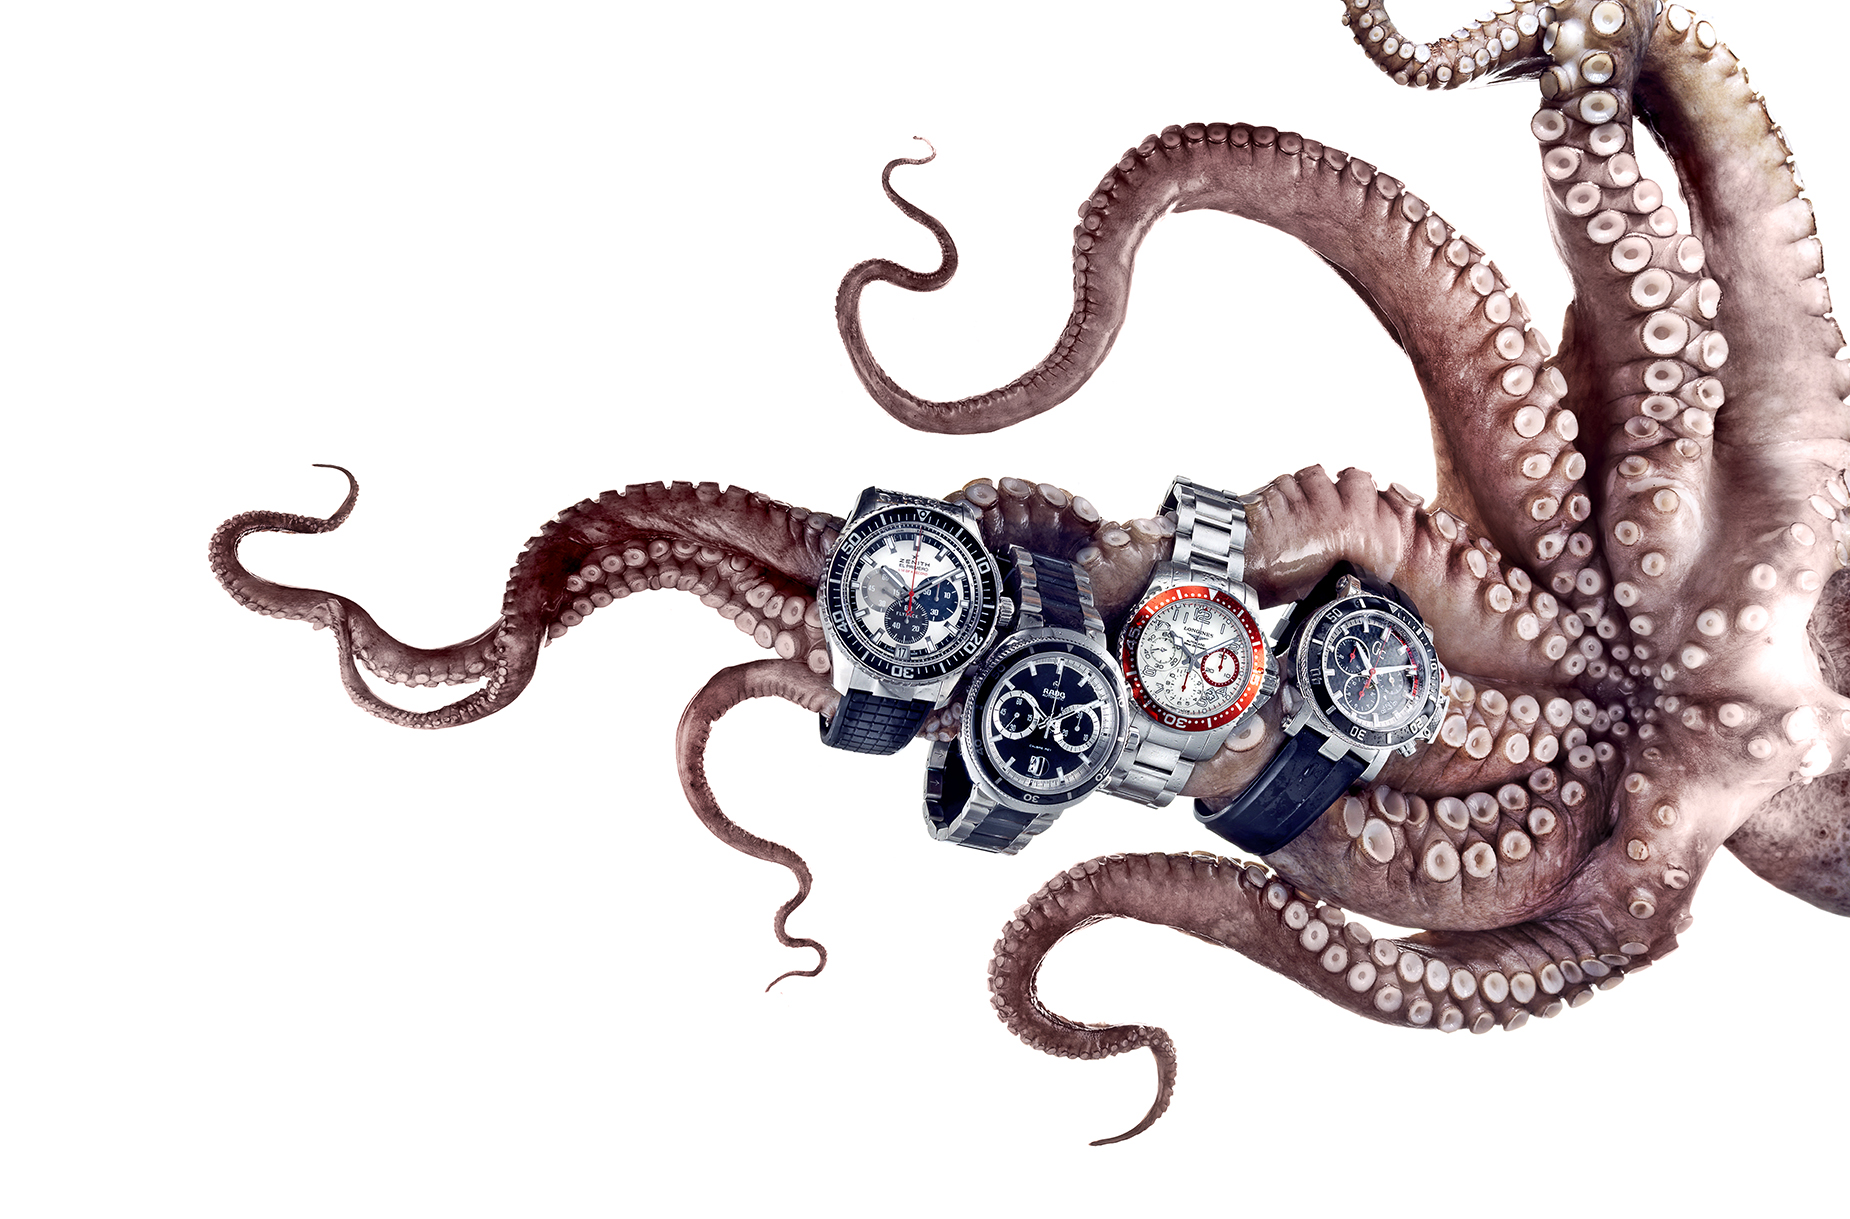 Octopus fx